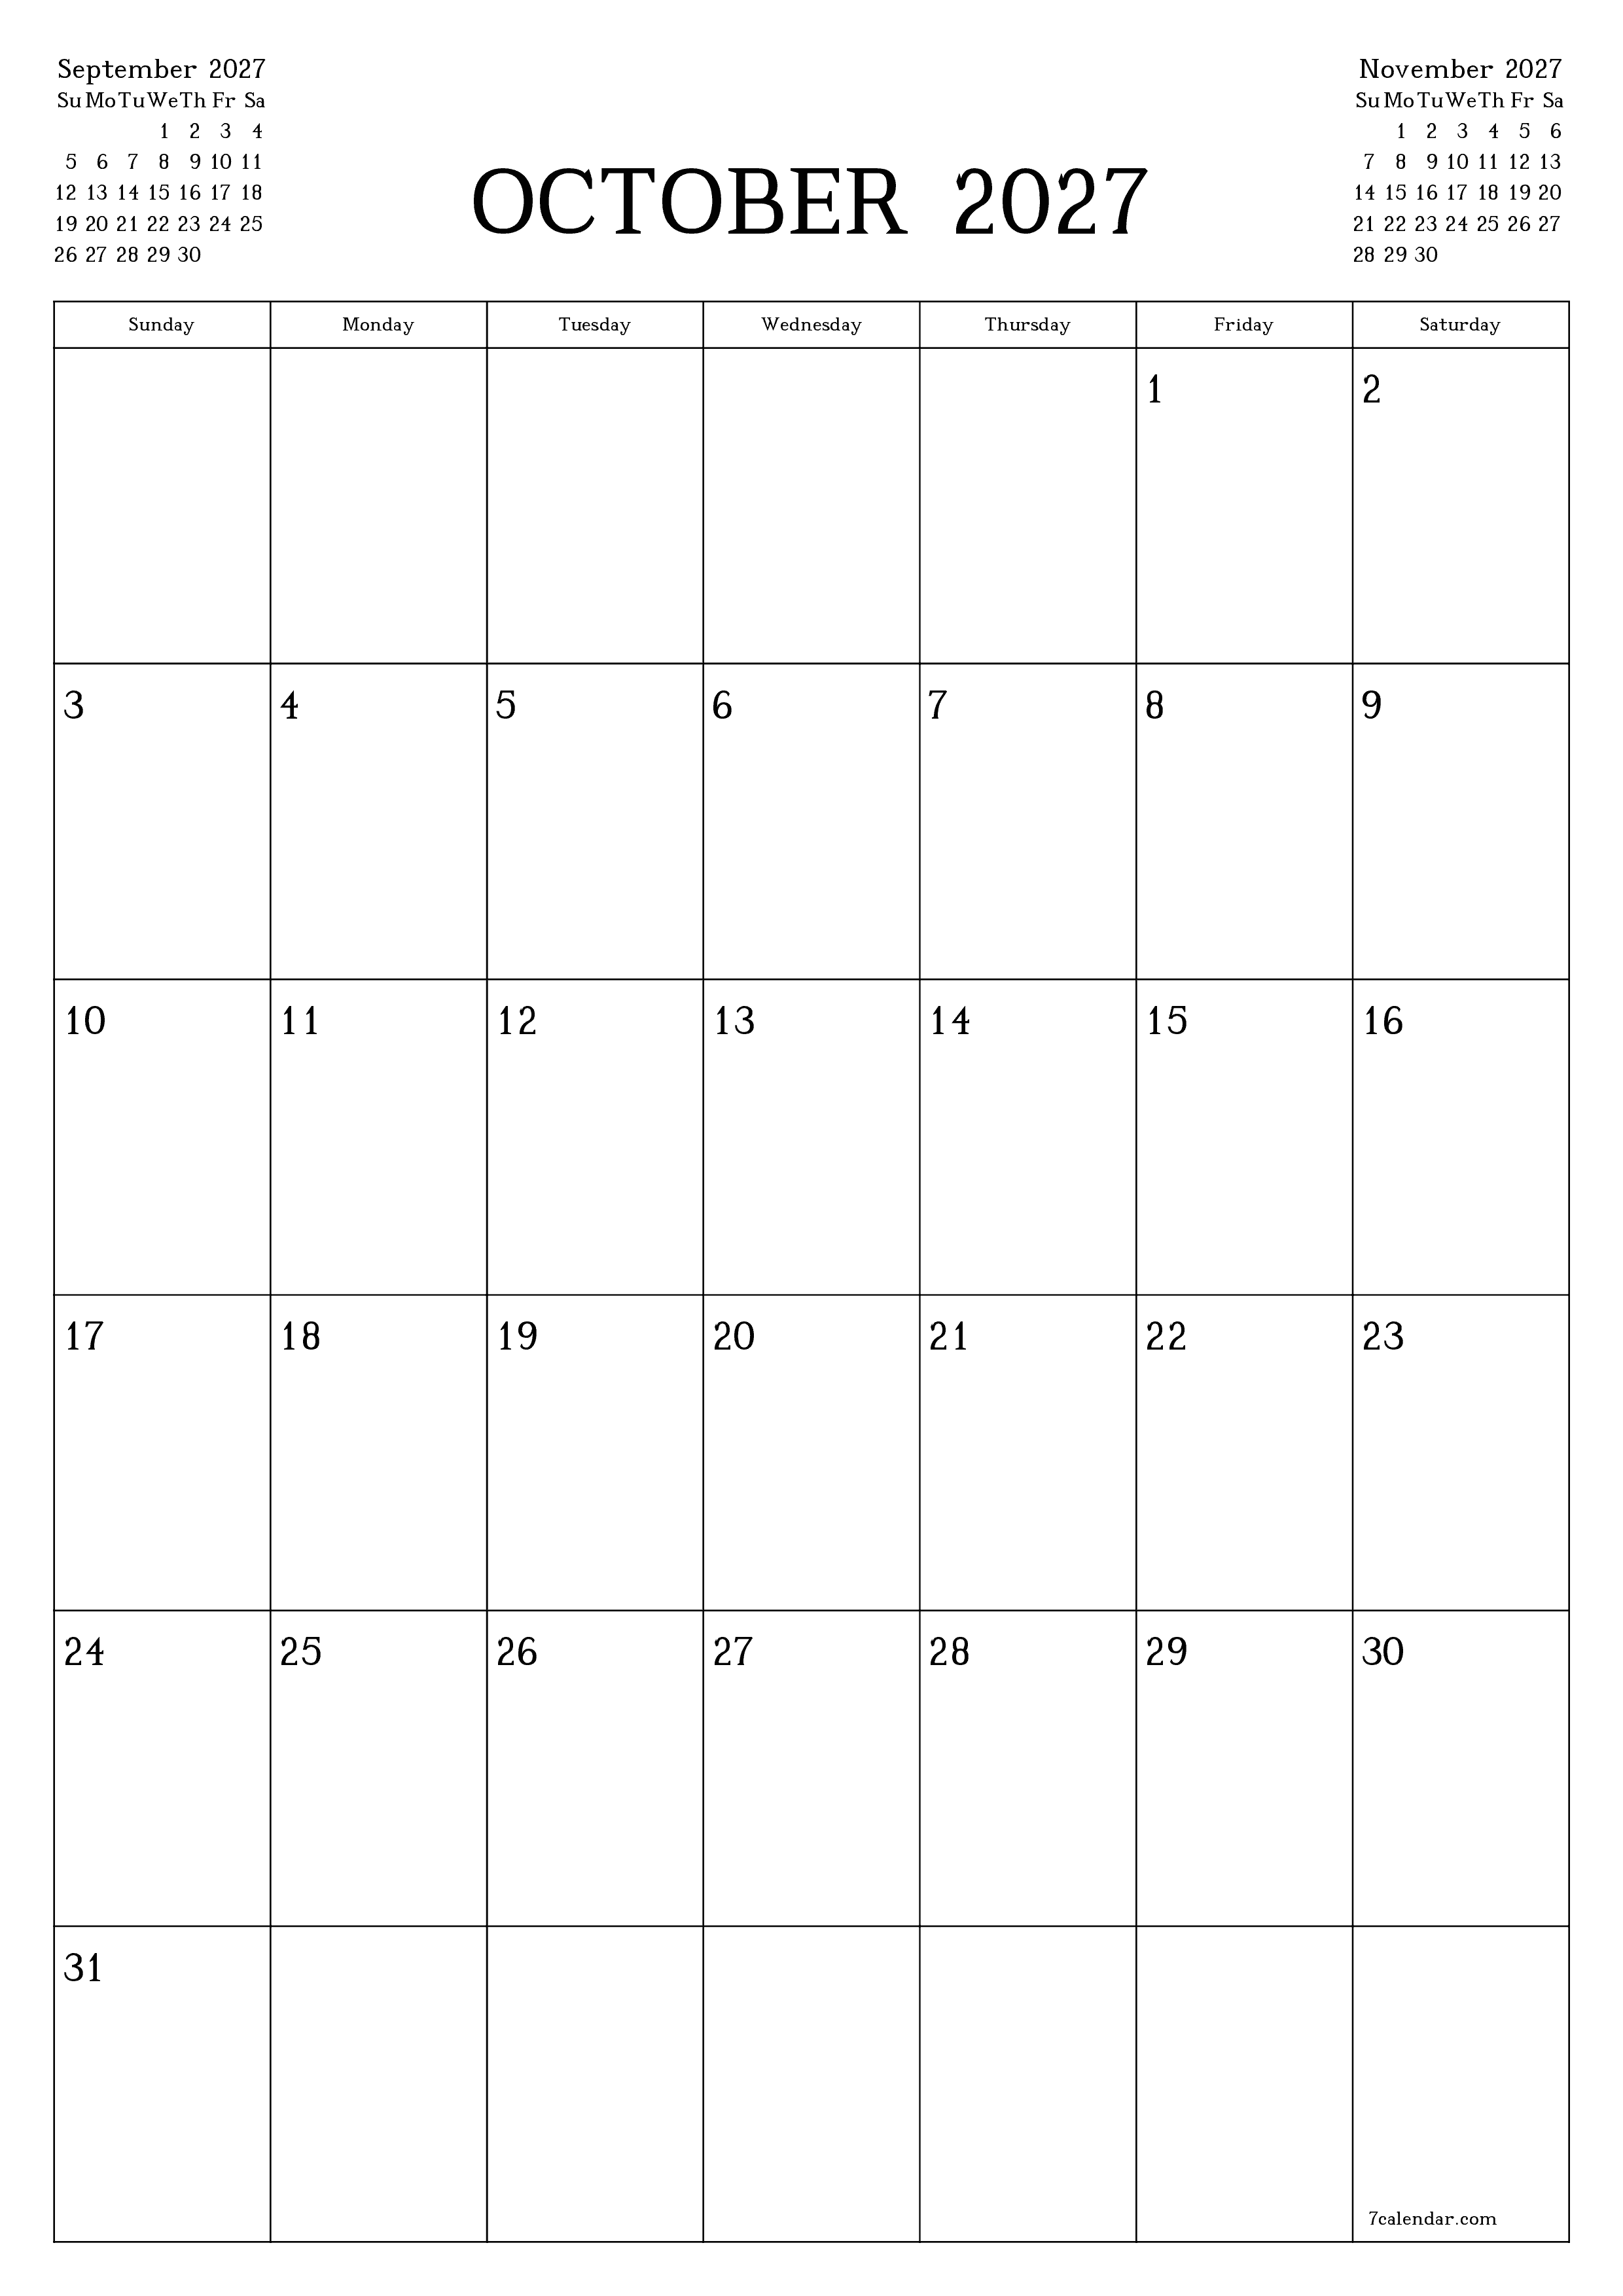 Blank calendar October 2027